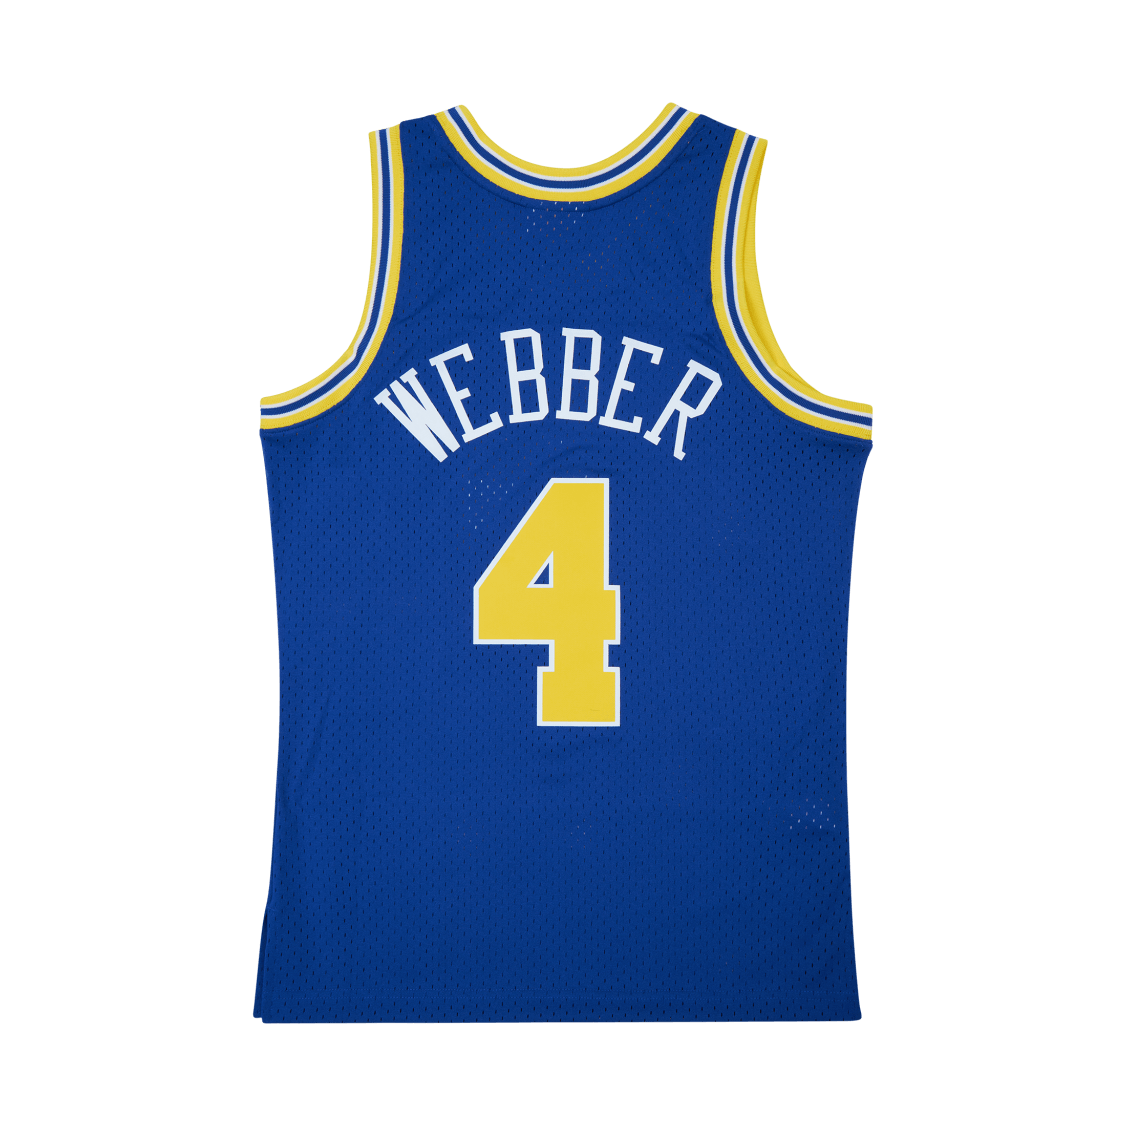 Warriors 93-94 Swingman Jersey - Chris Webber